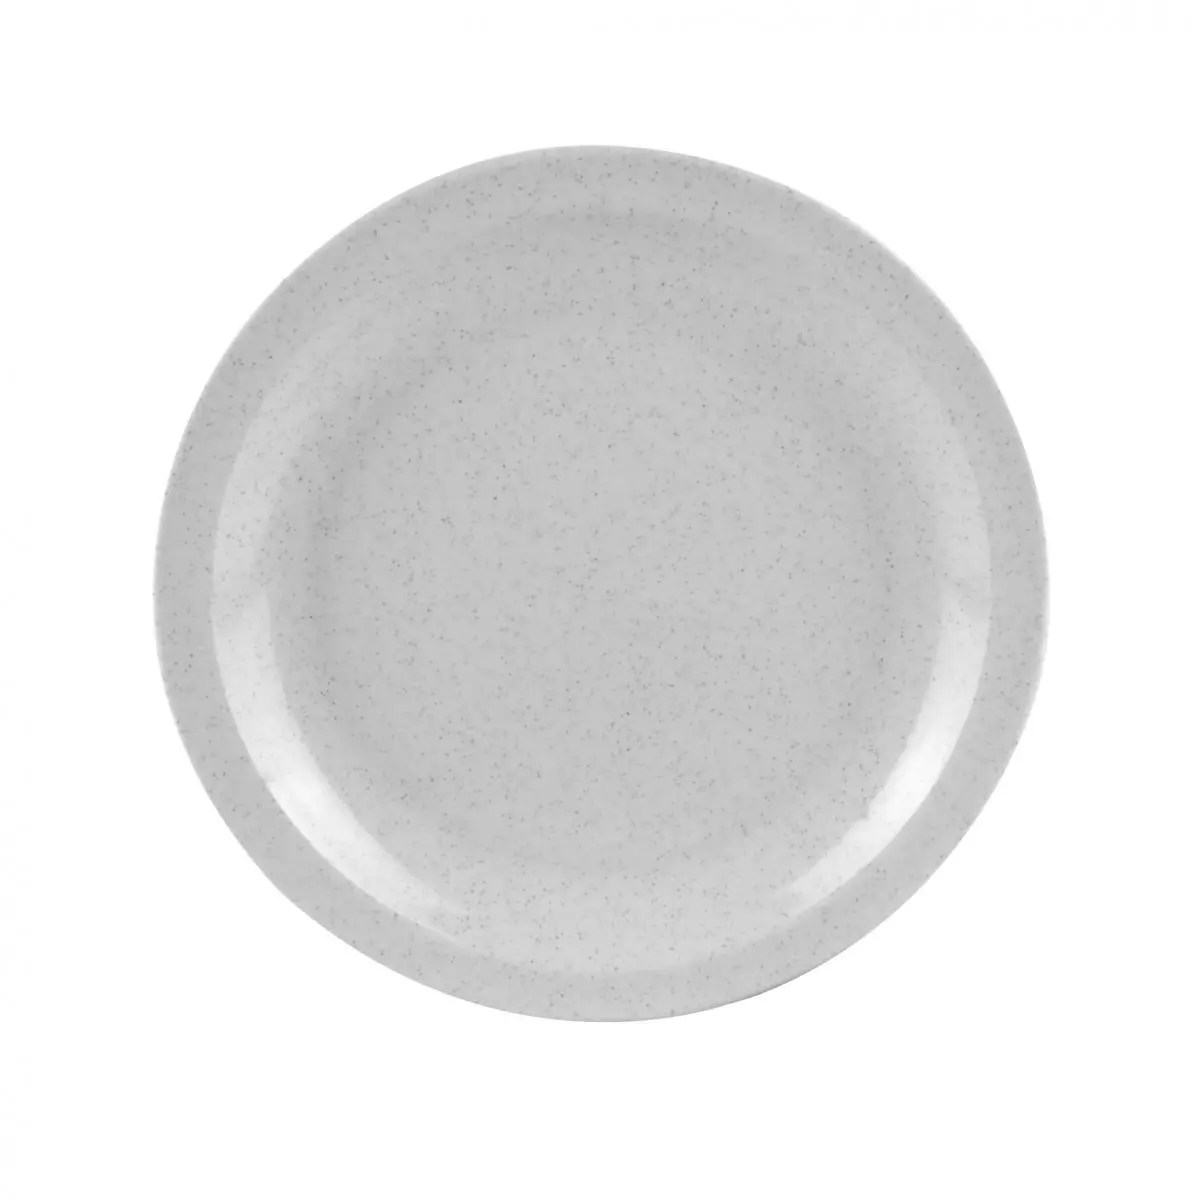 Séria riadu Granit uni - plochý tanier